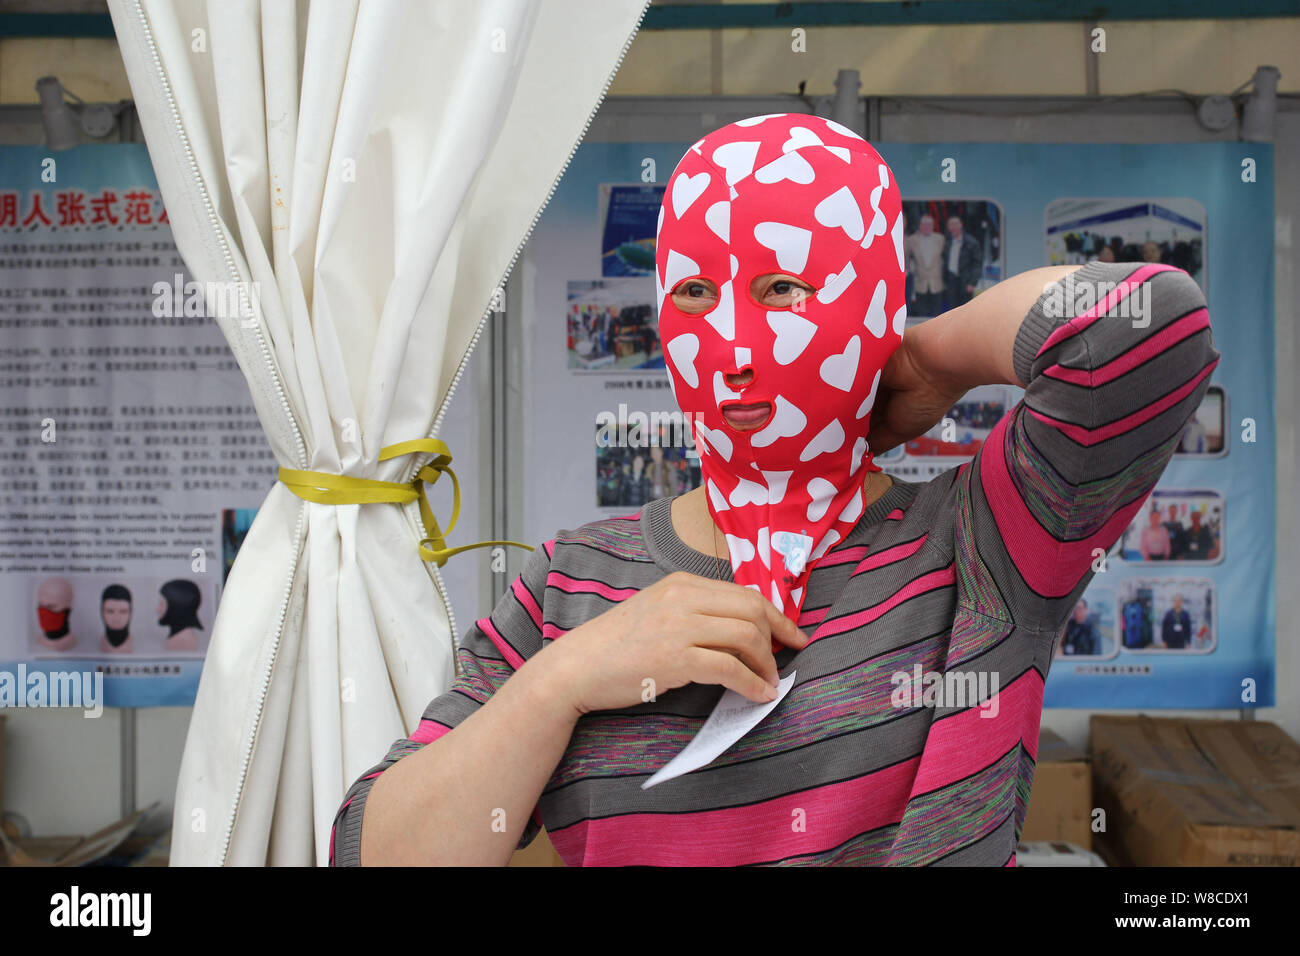 Chinese facekini designer Zhang Shifan puts on a facekini mask at her stand during the 13th China International Marine Fair and China (Qingdao) Intern Stock Photo